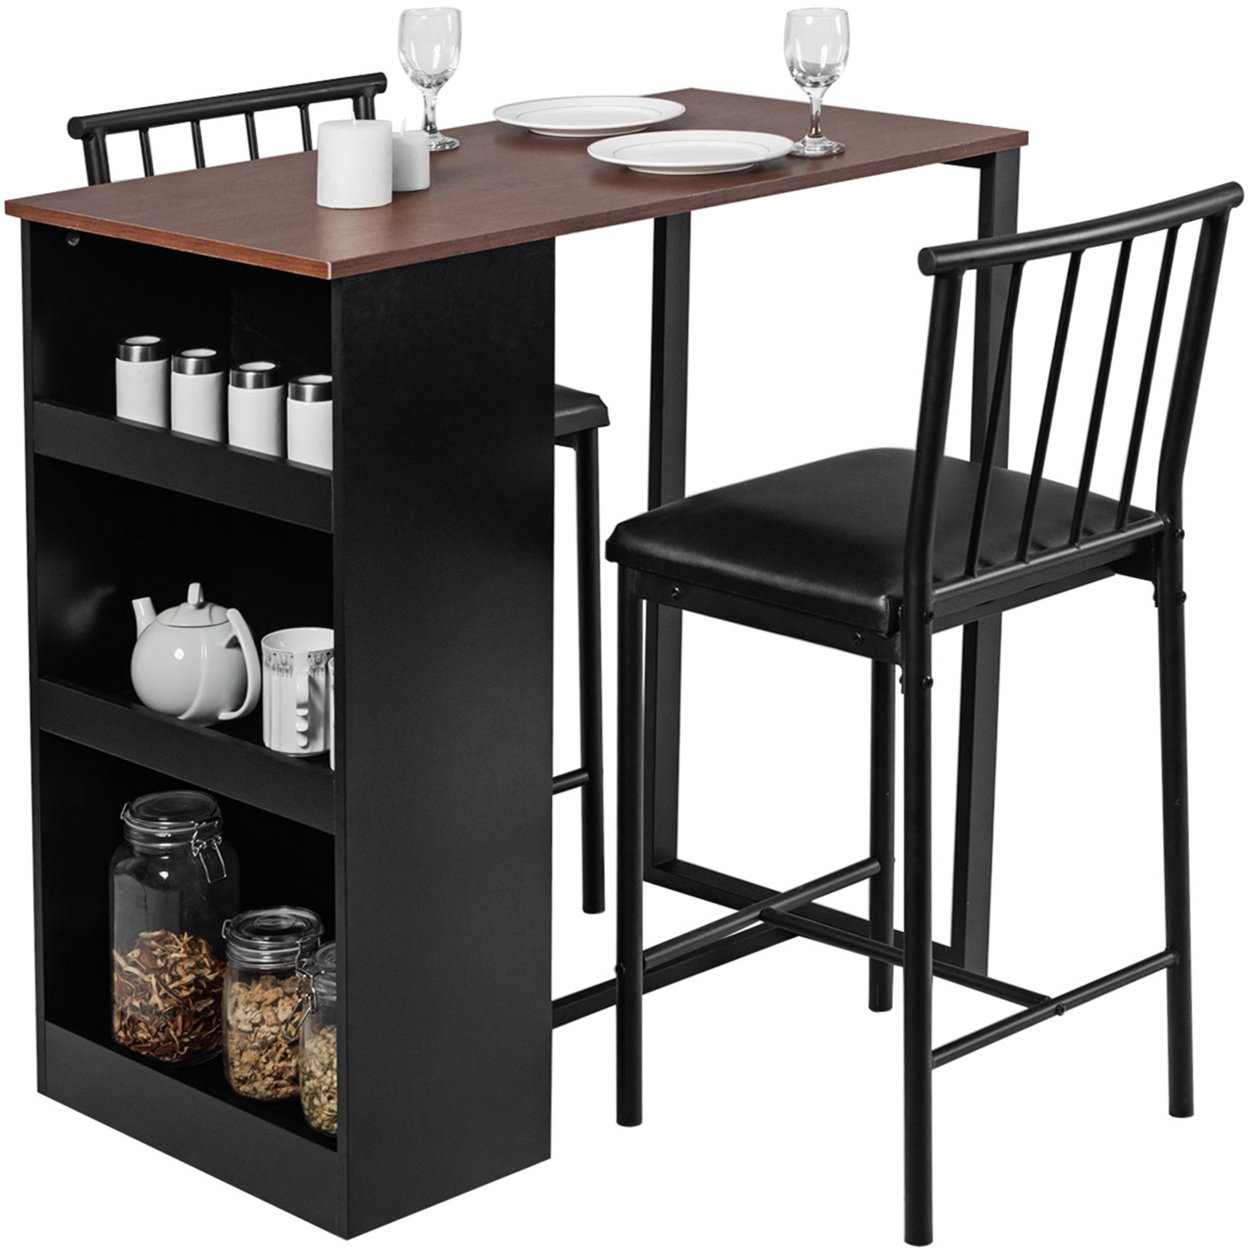 3 Piece Counter Height Pub Dining Set Kitchen Table & Chairs W/ Storage Espresso